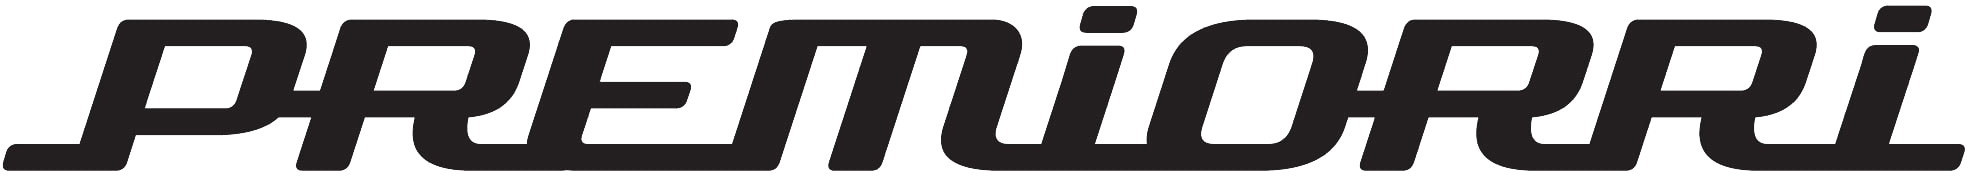 Производитель PREMIORRI логотип